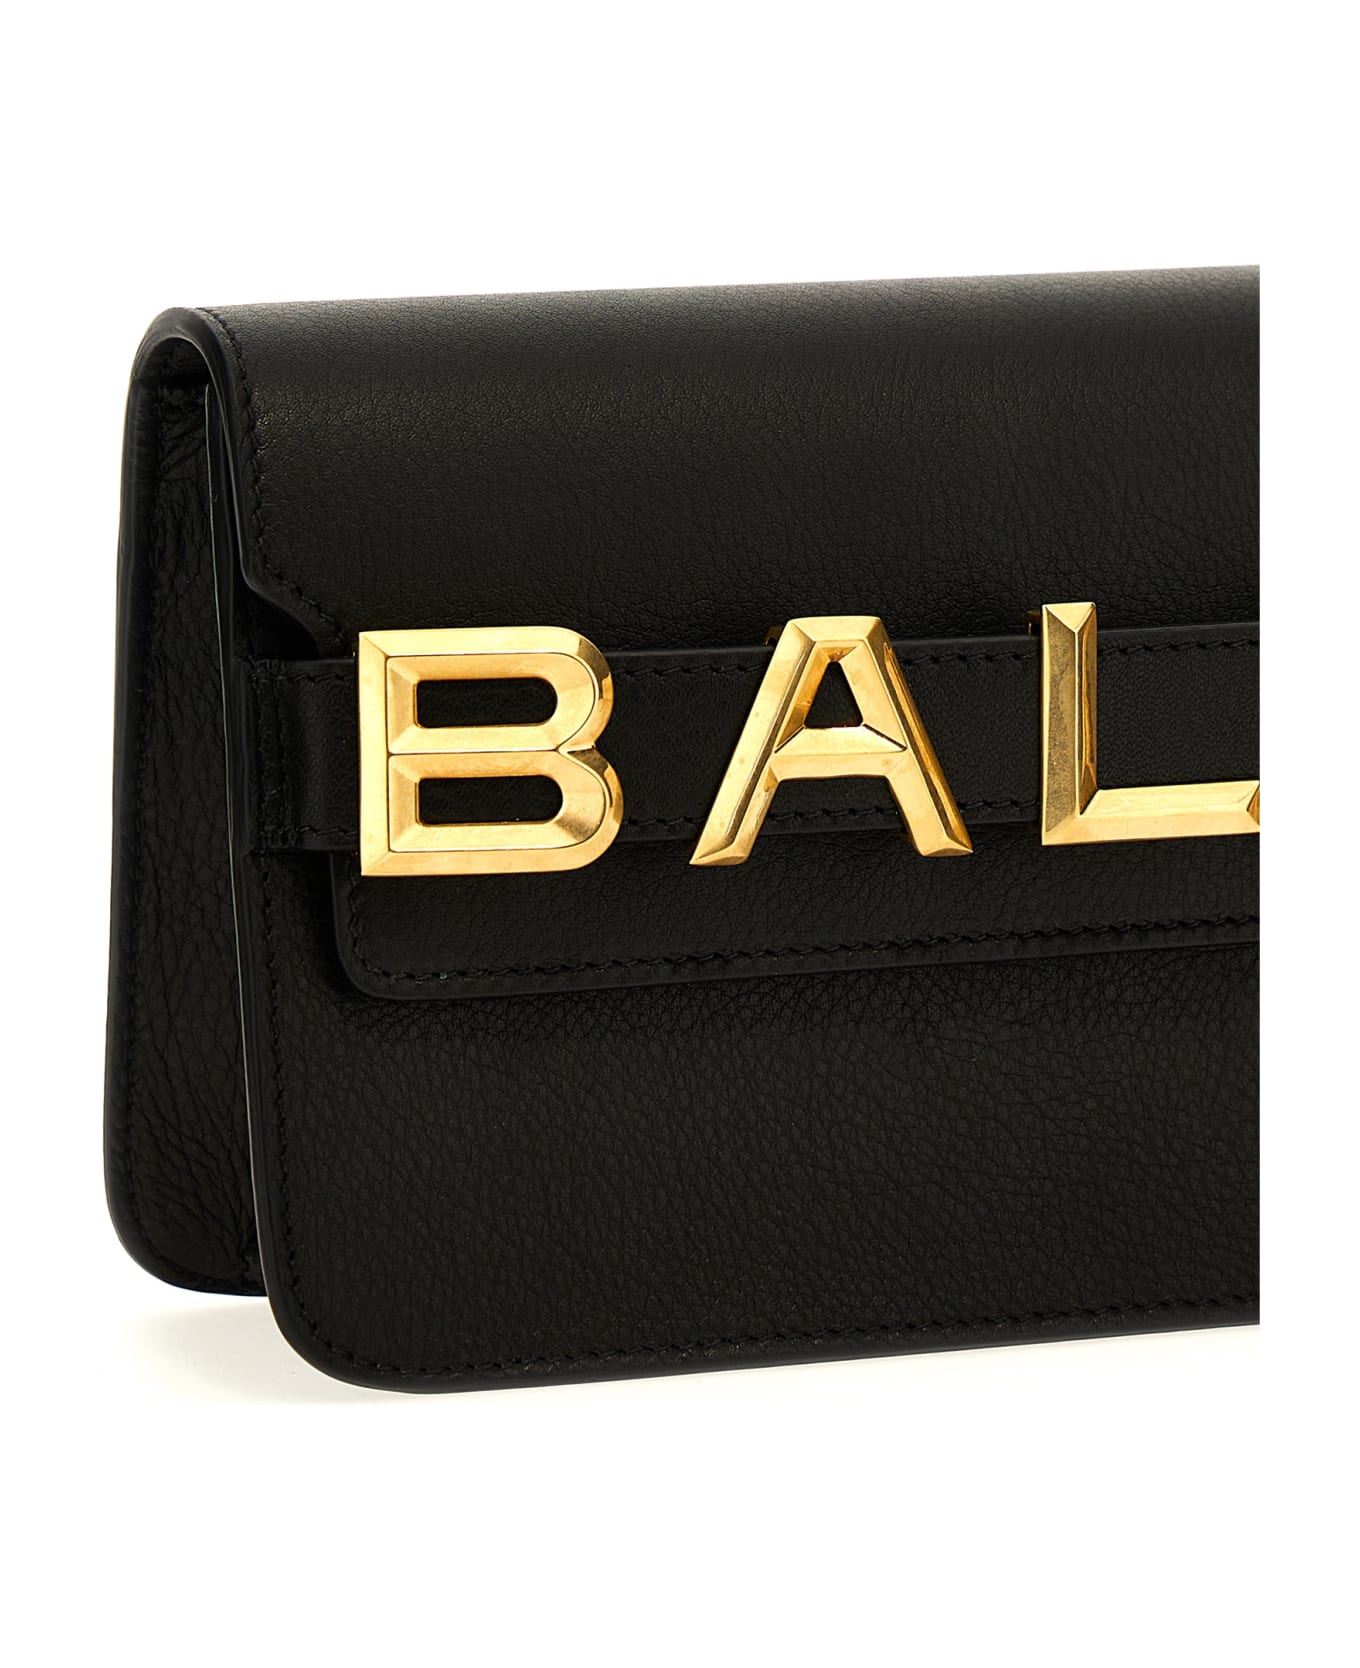 Bally Logo Crossbody Bag - Nero/oro